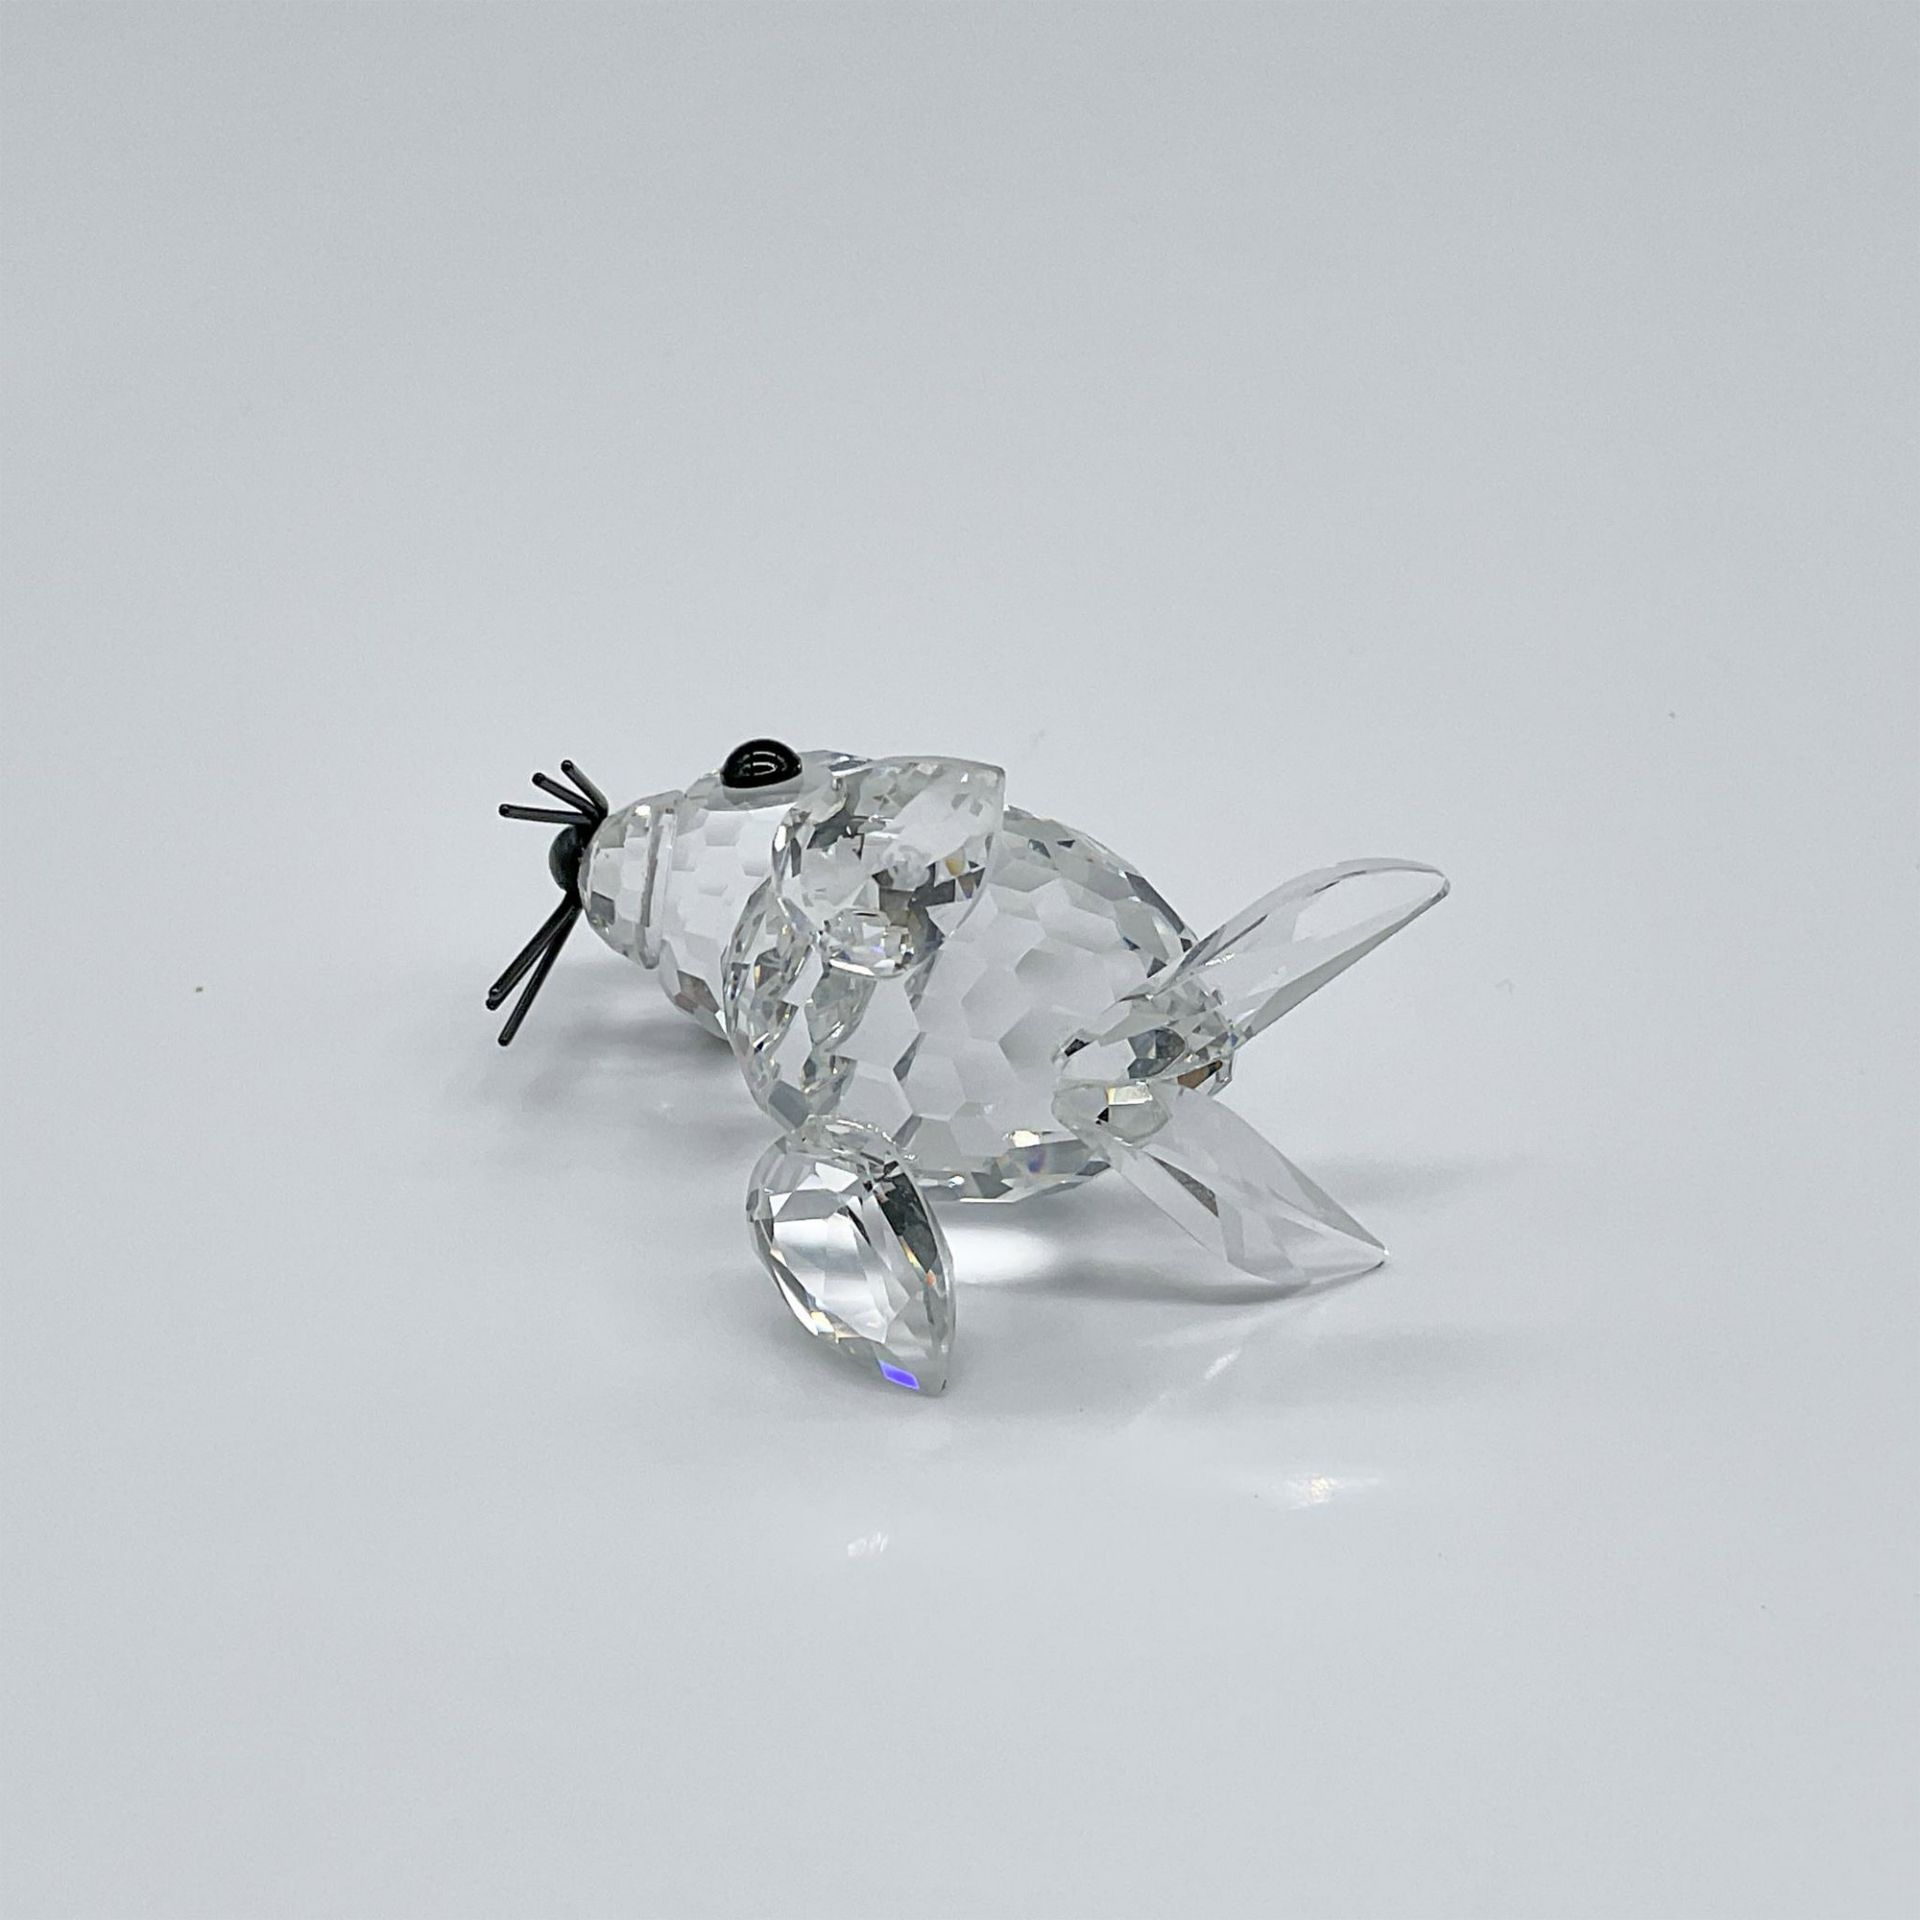 Swarovski Silver Crystal Figurine Baby Seal w/Black Whiskers - Image 3 of 4